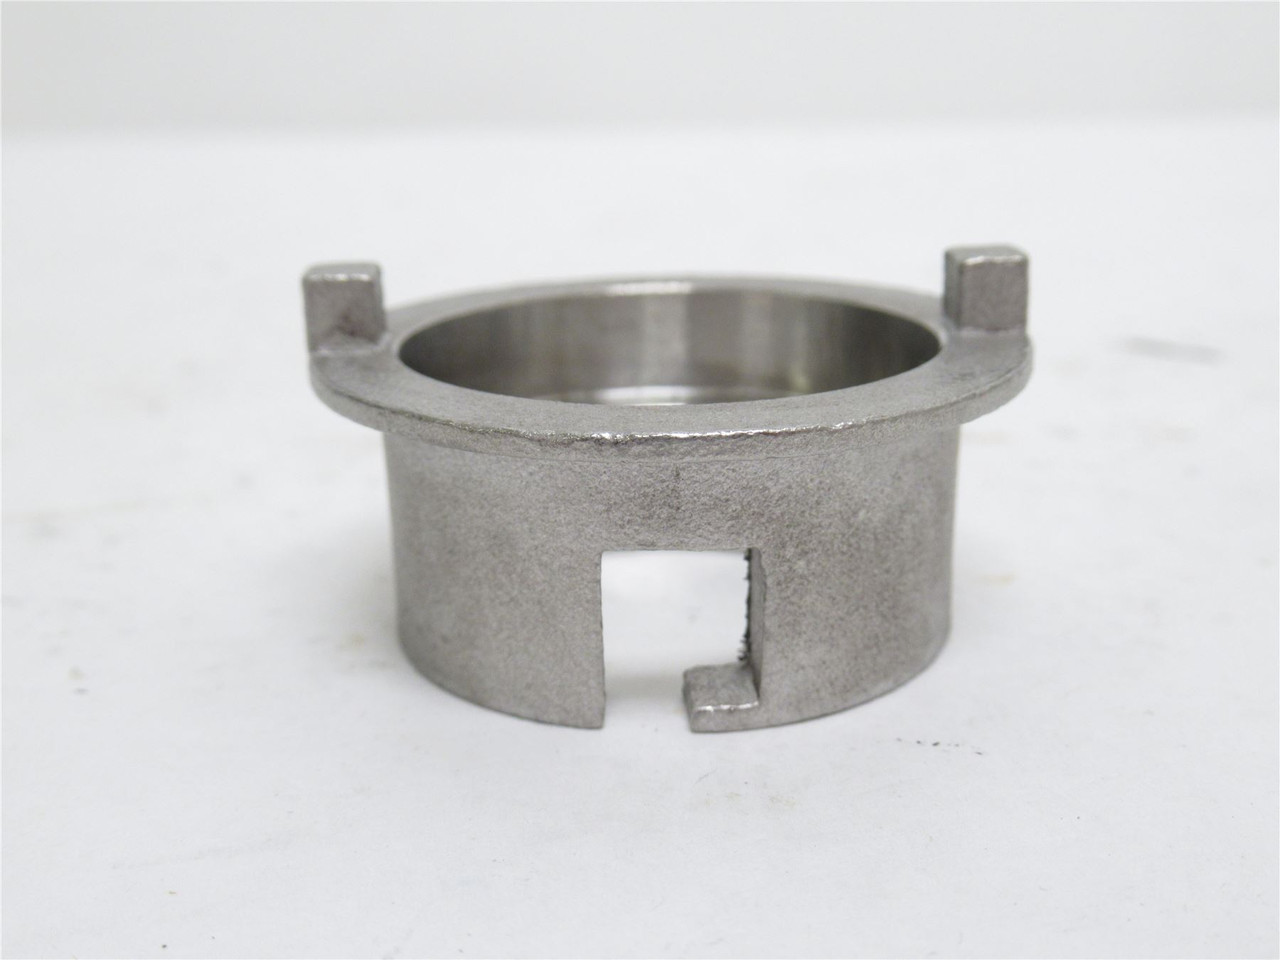 SPX M727P331926; Cast Ring 413-80-0055; #4V2 Cent Pump